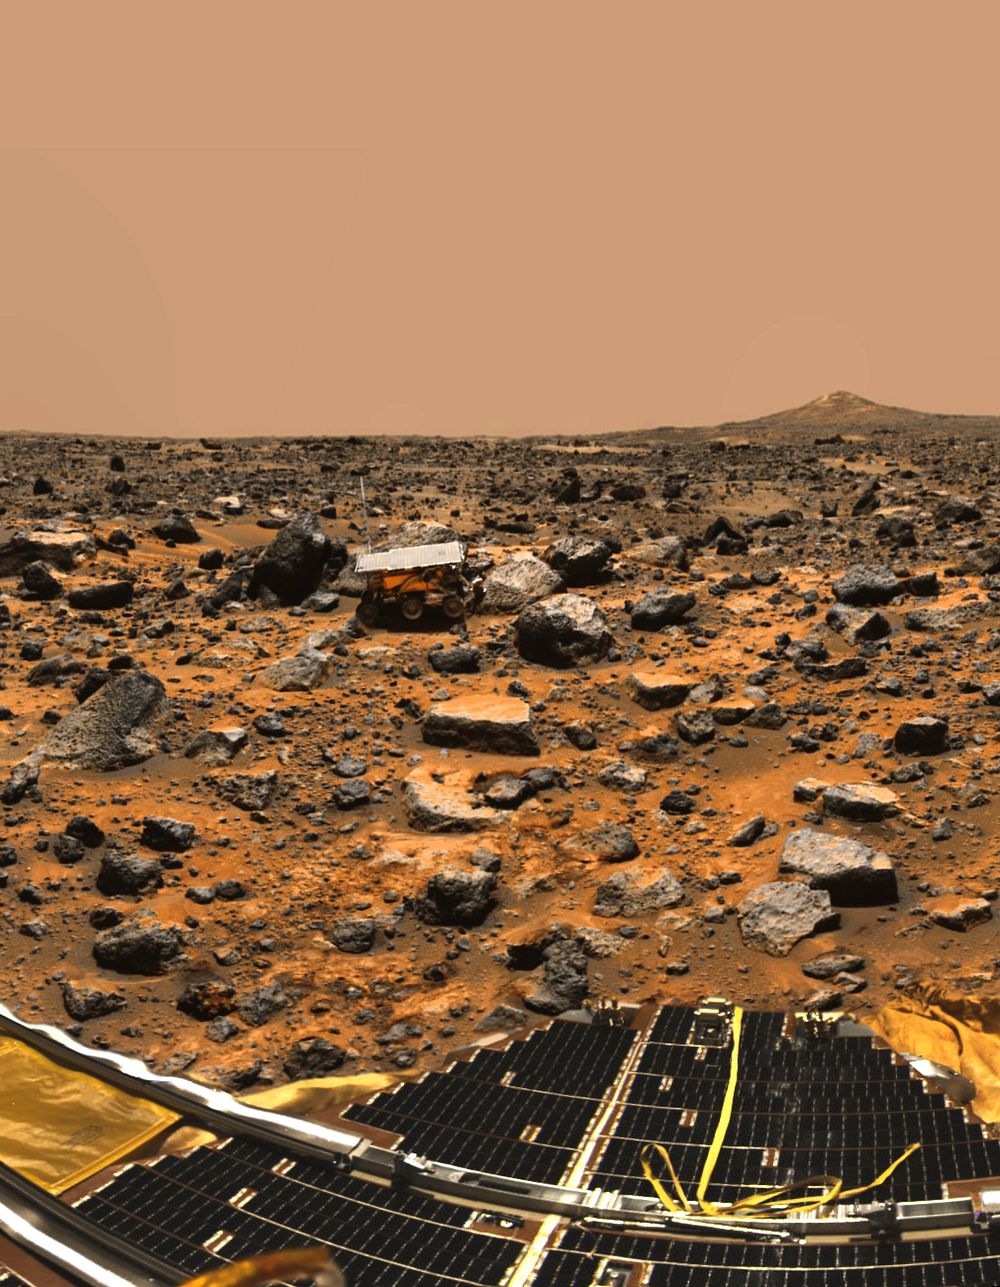 Pathfinder on Mars. Dec 12th, 1997. Original from NASA. Digitally enhanced by rawpixel.